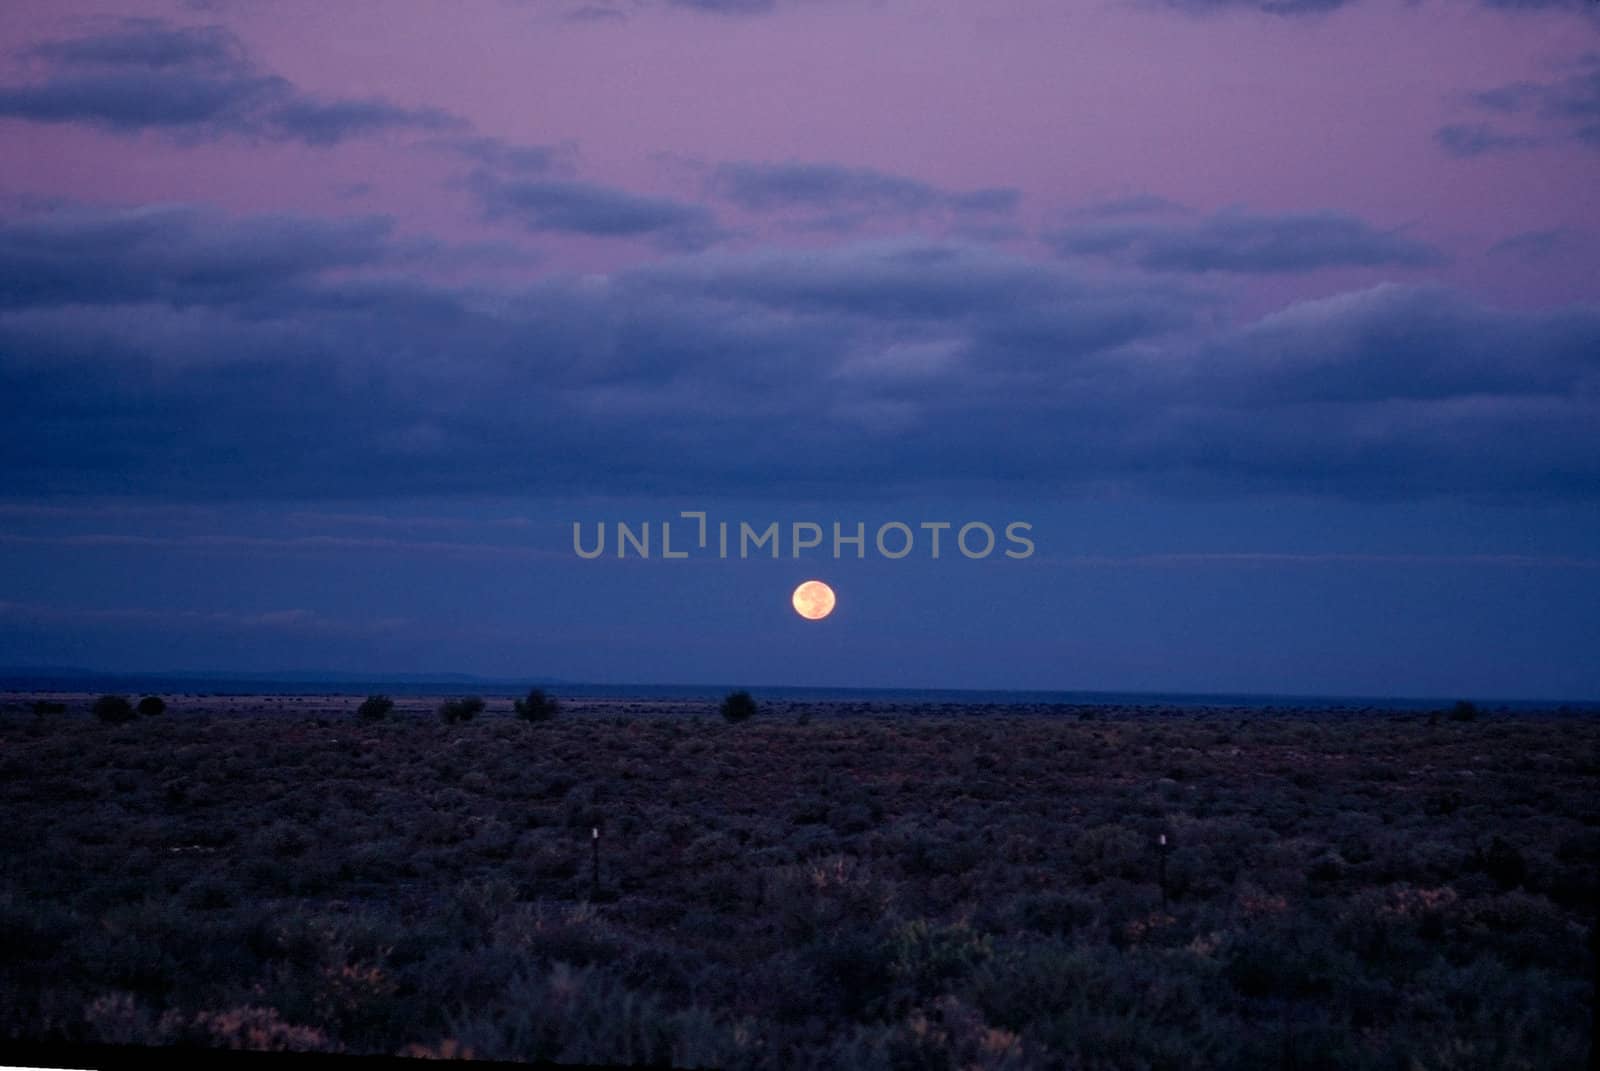 Moonrise in Arizona desert